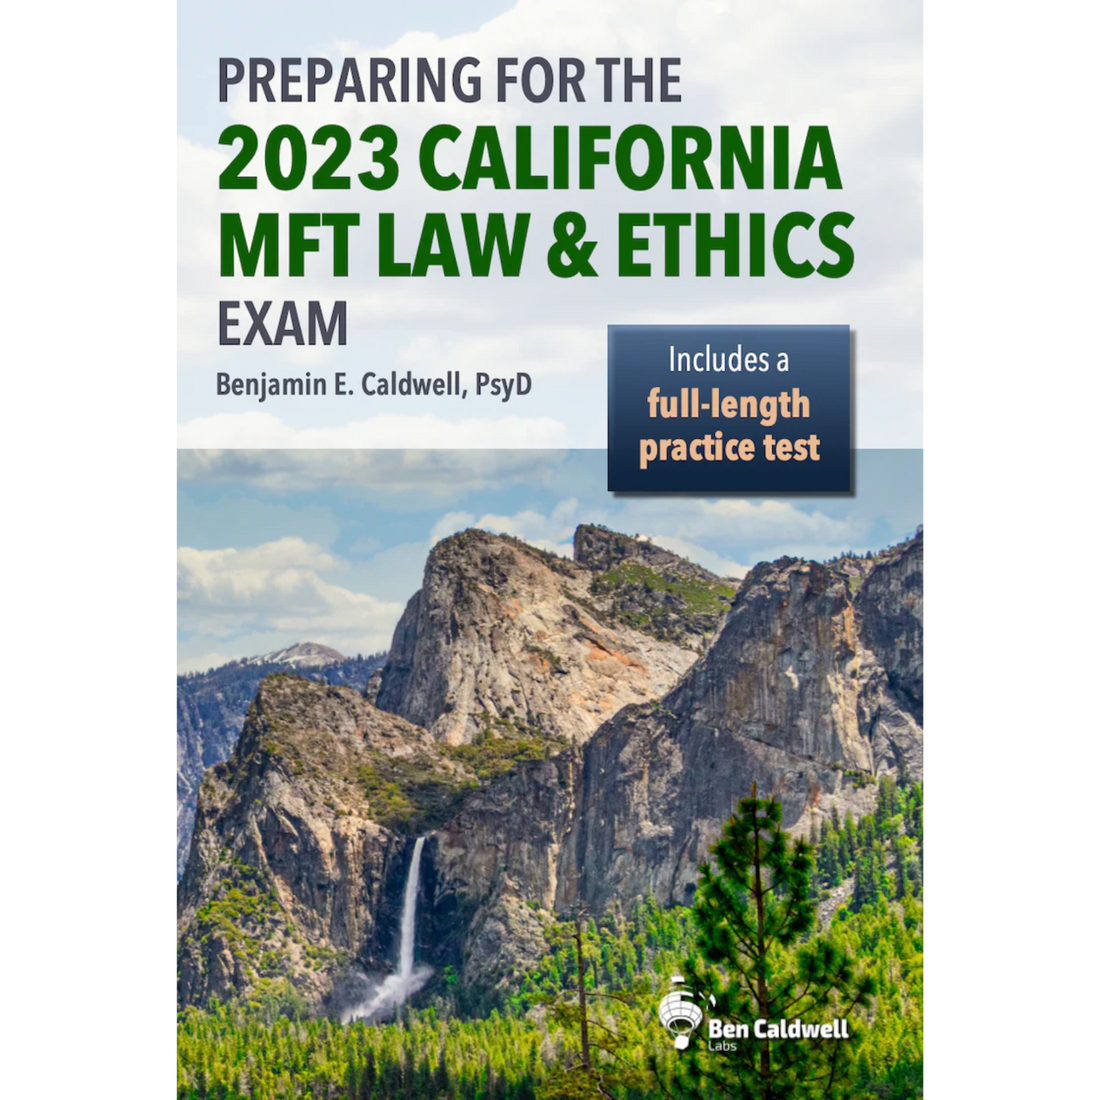 Preparing for the 2023 California MFT Law & Ethics Exam